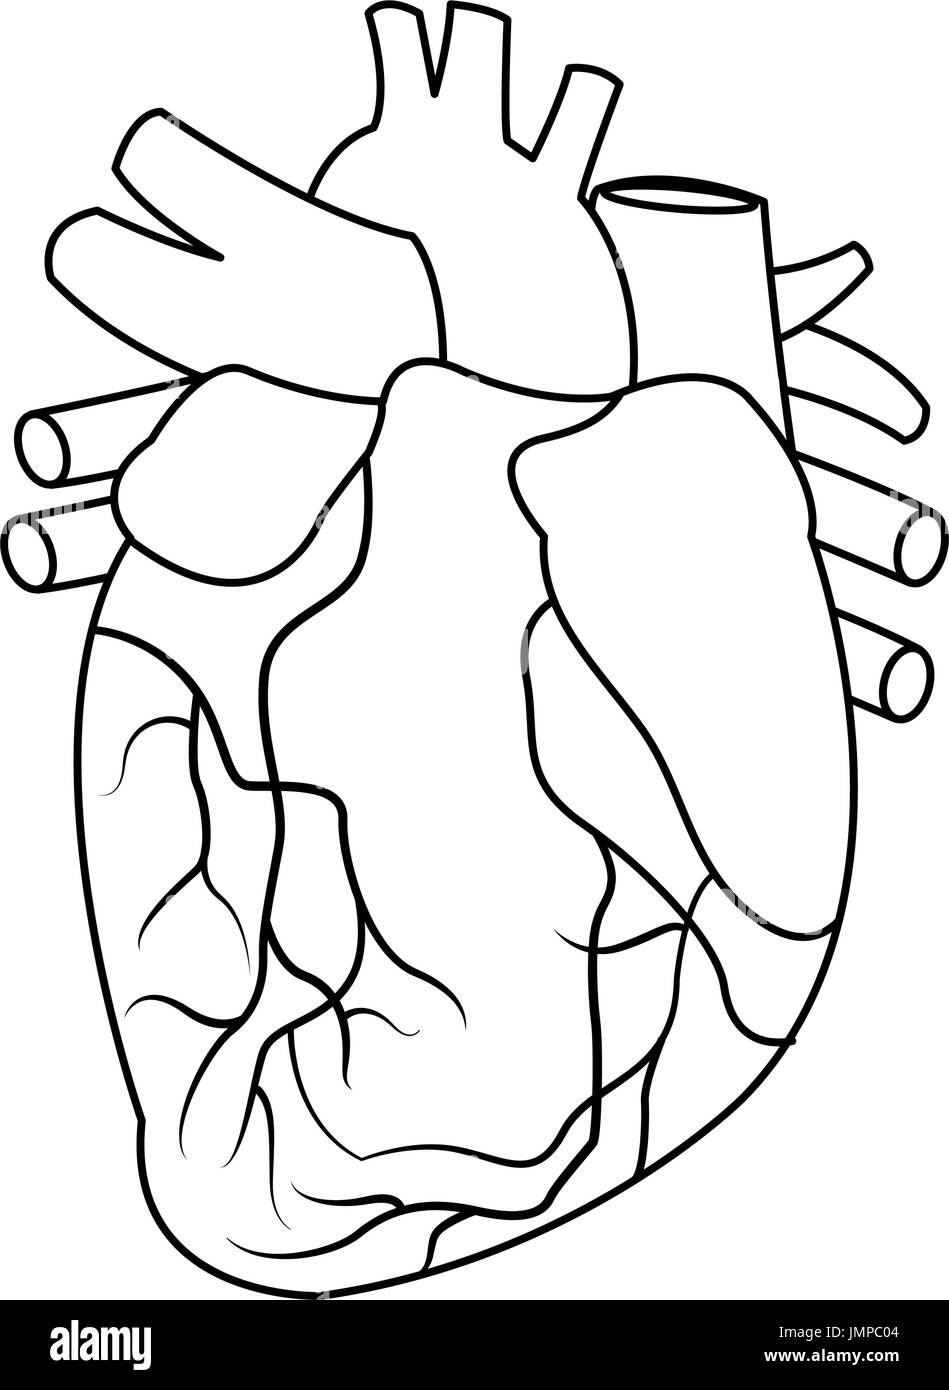 Anatomy of the human heart illustration Stock Vector